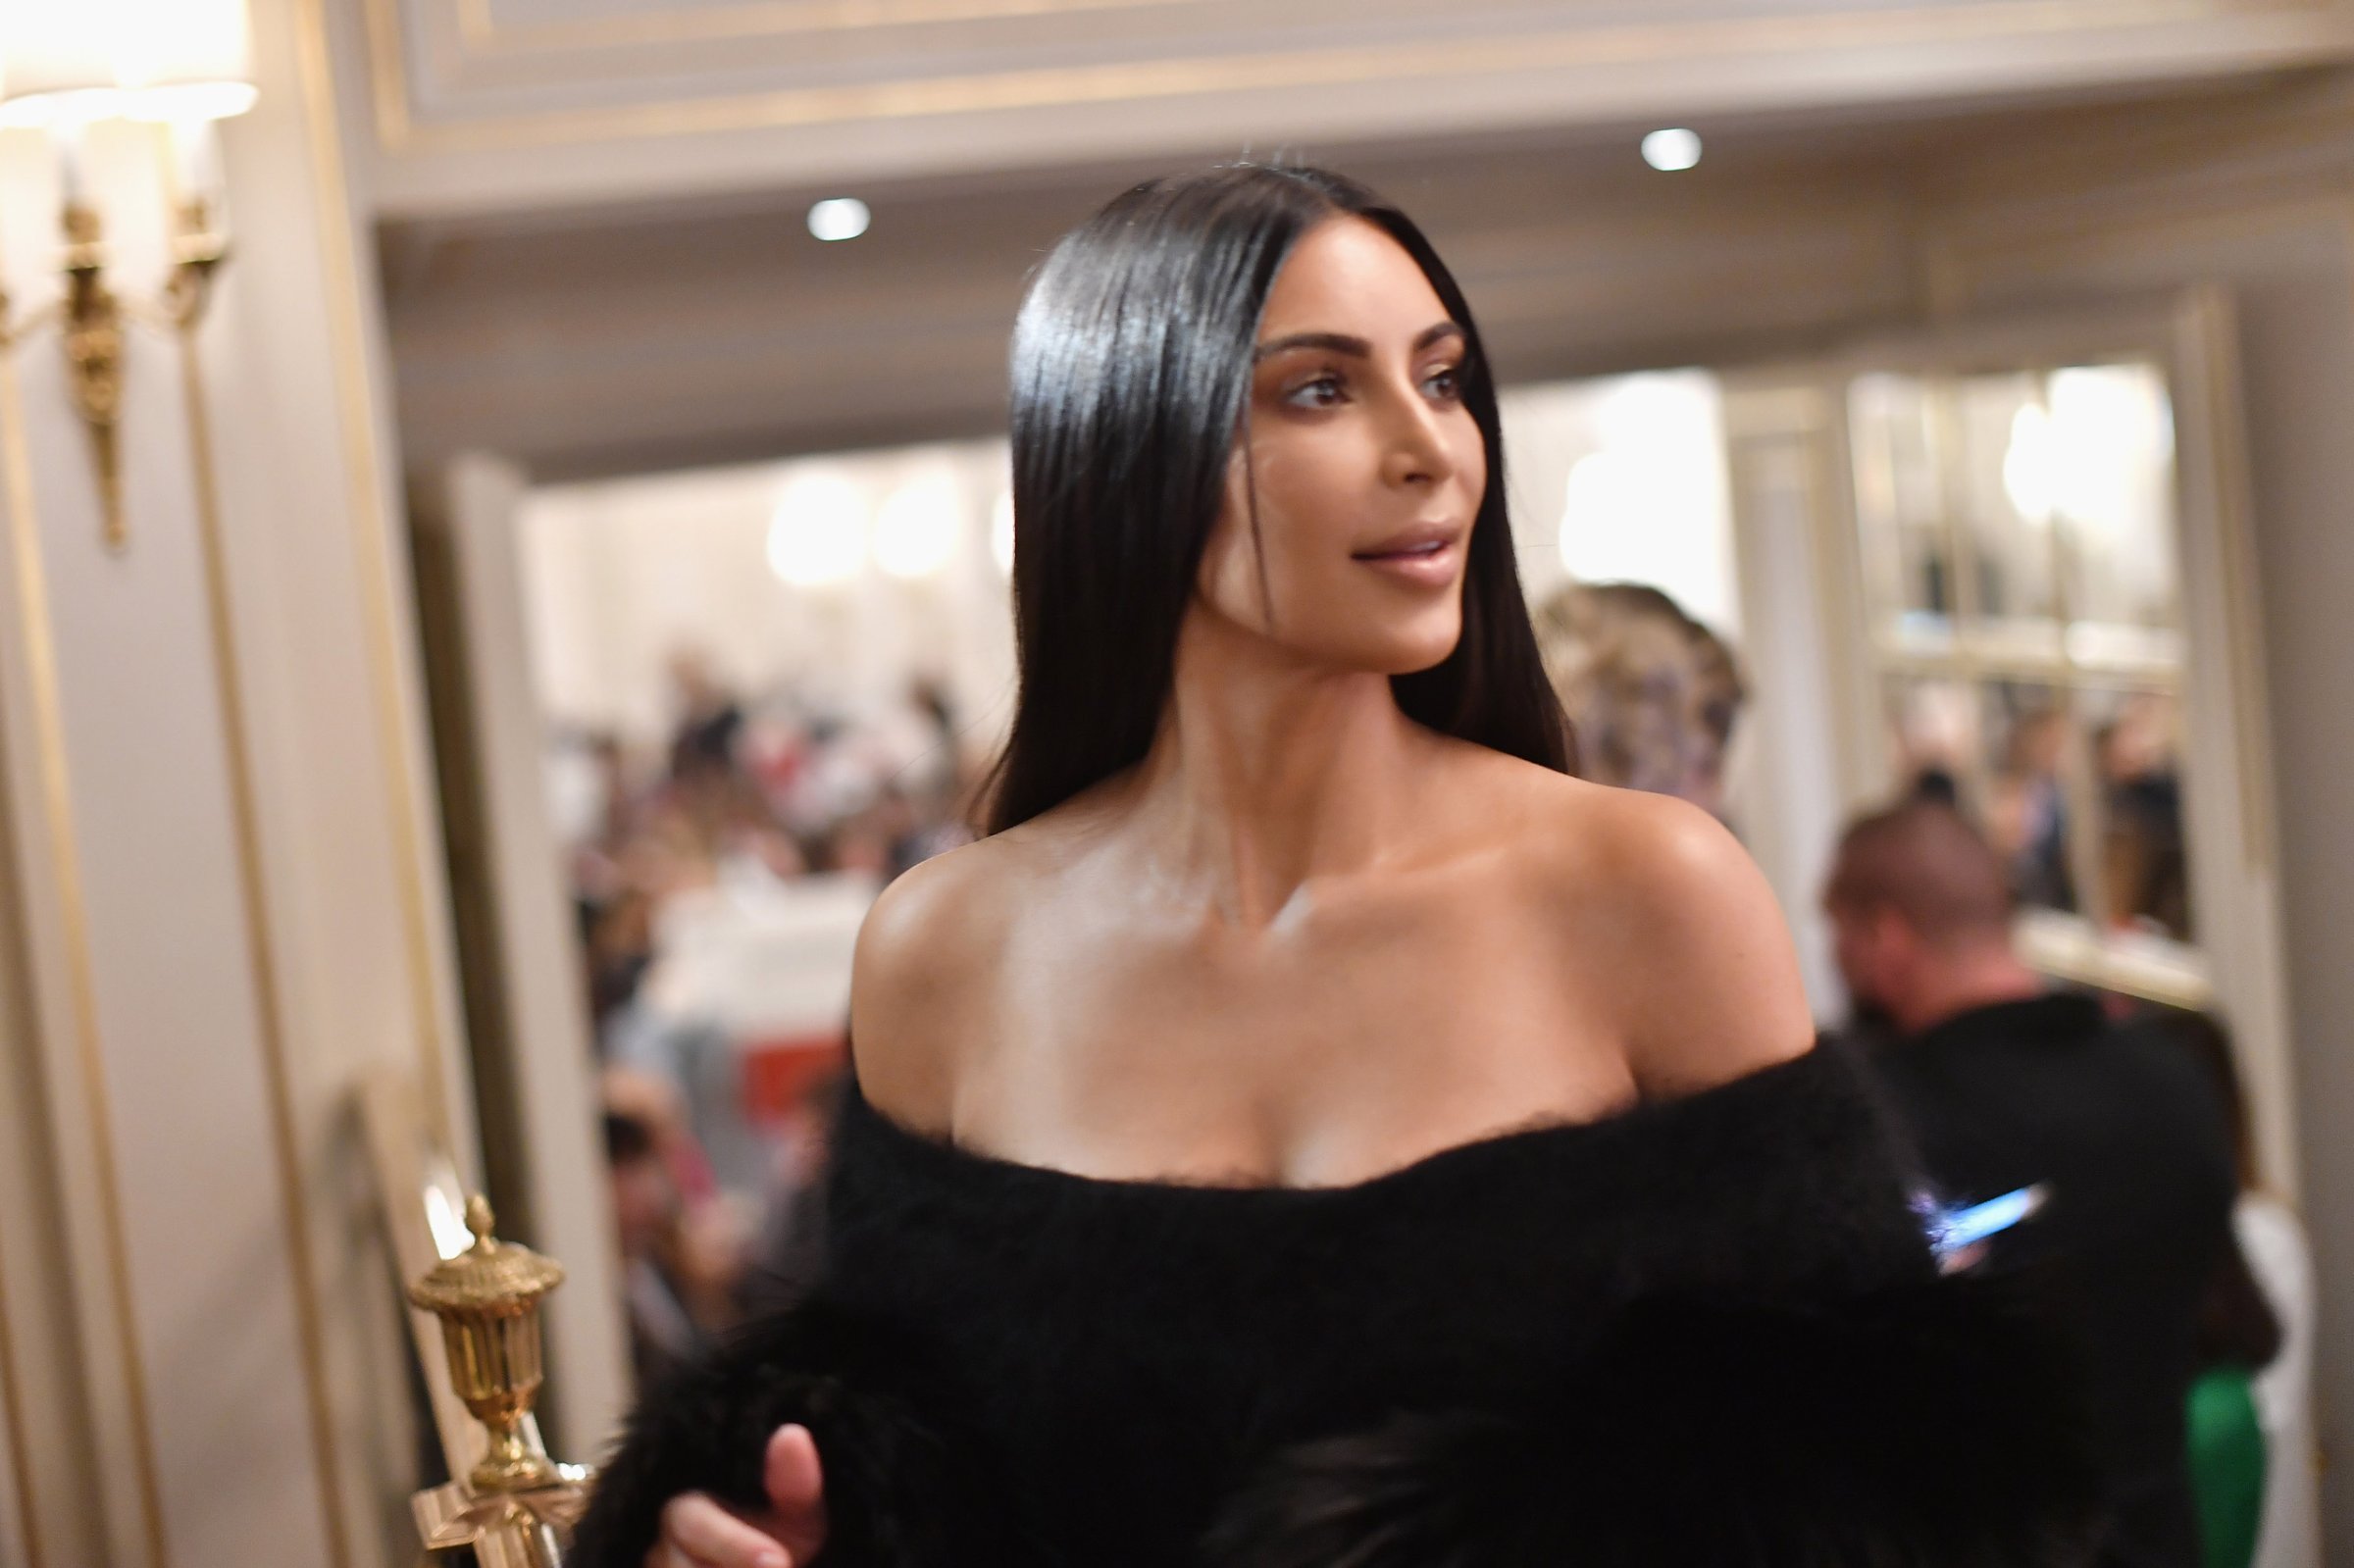 PARIS, FRANCE - SEPTEMBER 30: Kim Kardashian West attends Buro 24/7 Fashion Forward Initiative as part of Paris Fashion Week Womenswear Spring/Summer 2016 at Hotel Ritz on September 30, 2016 in Paris, France. (Photo by Jacopo Raule/Getty Images)